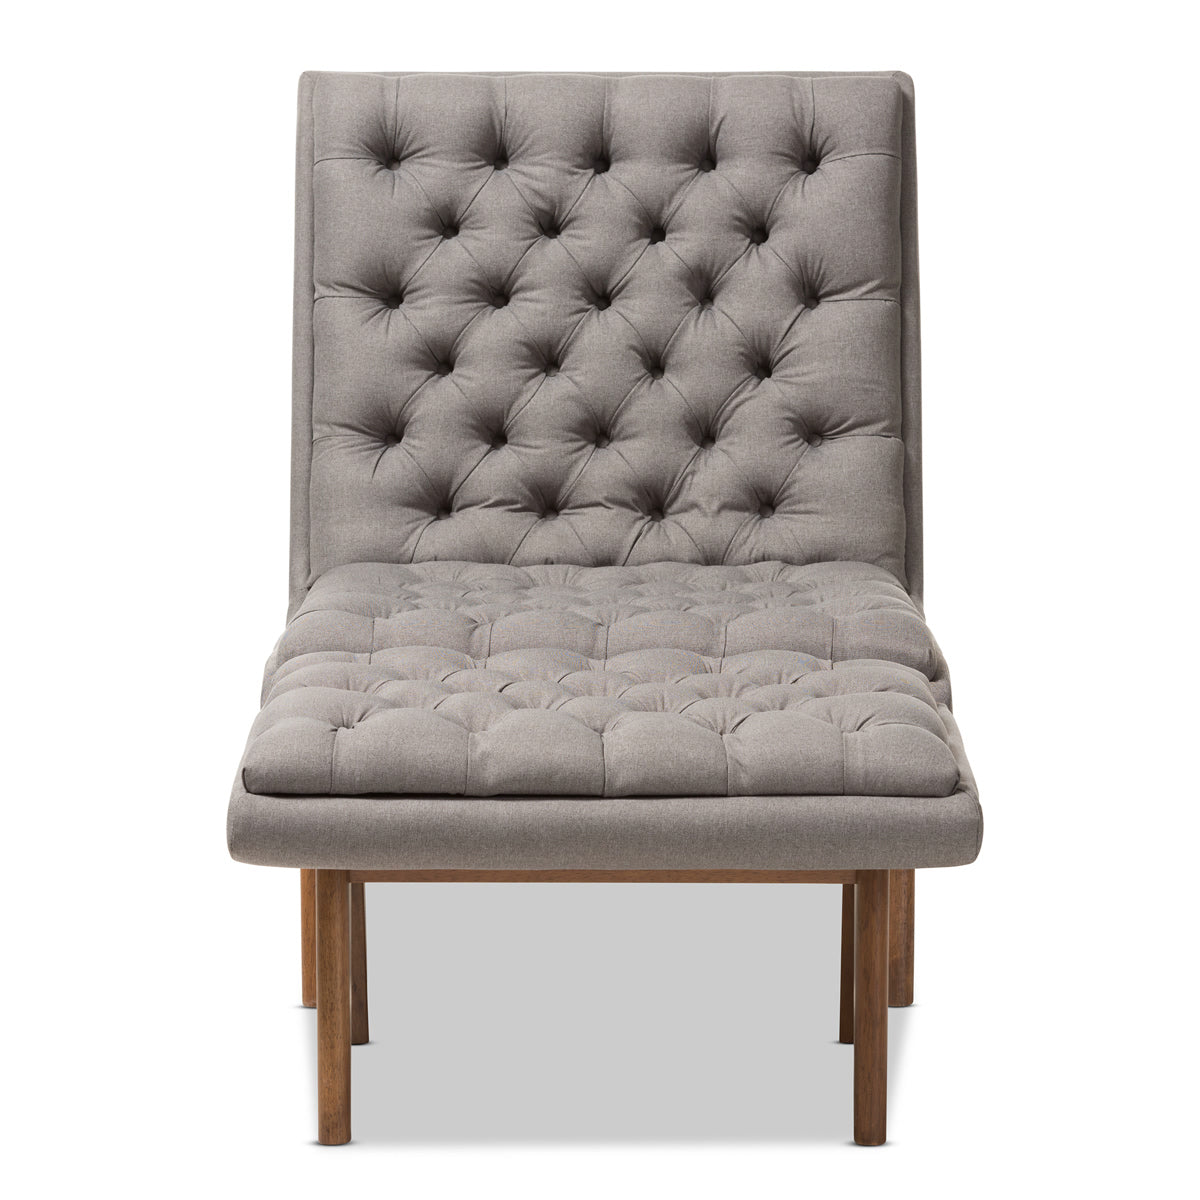 Baxton Studio Annetha Mid-Century Modern Grey Fabric Upholstered Walnut Finished Wood Chair And Ottoman Set Baxton Studio-0-Minimal And Modern - 2